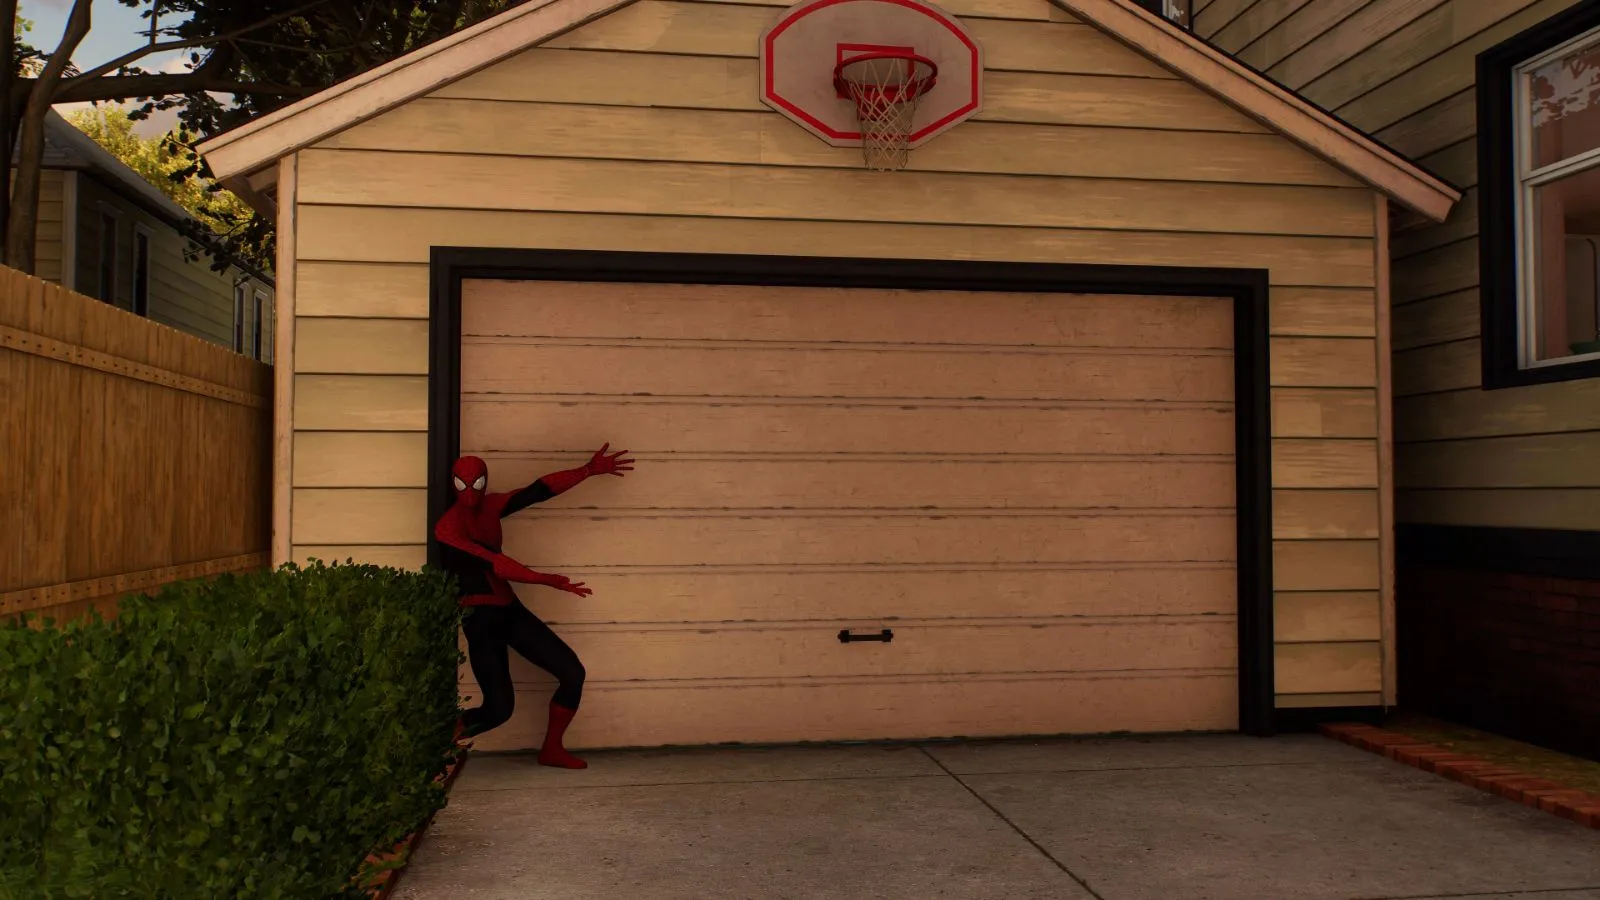 Spider-Man in front of his garage